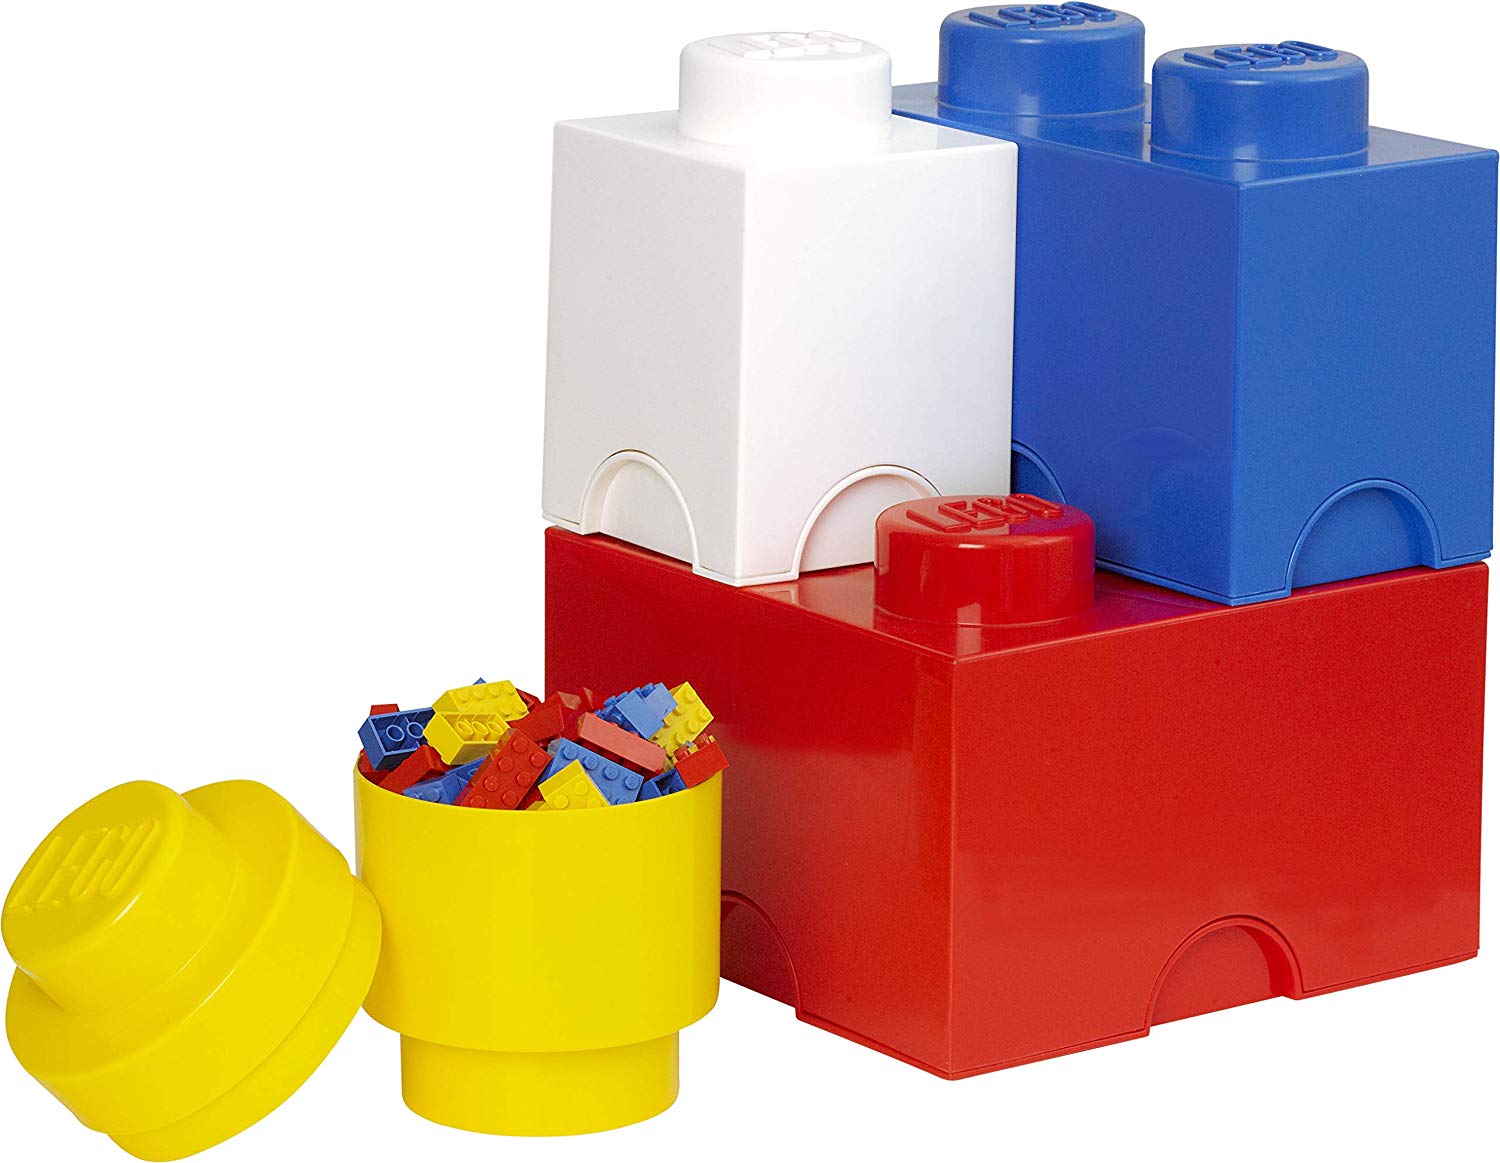 Lego Storage Brick Multi Pack (4 Piece) – Bright Red/Bright Blue/Bright Yel